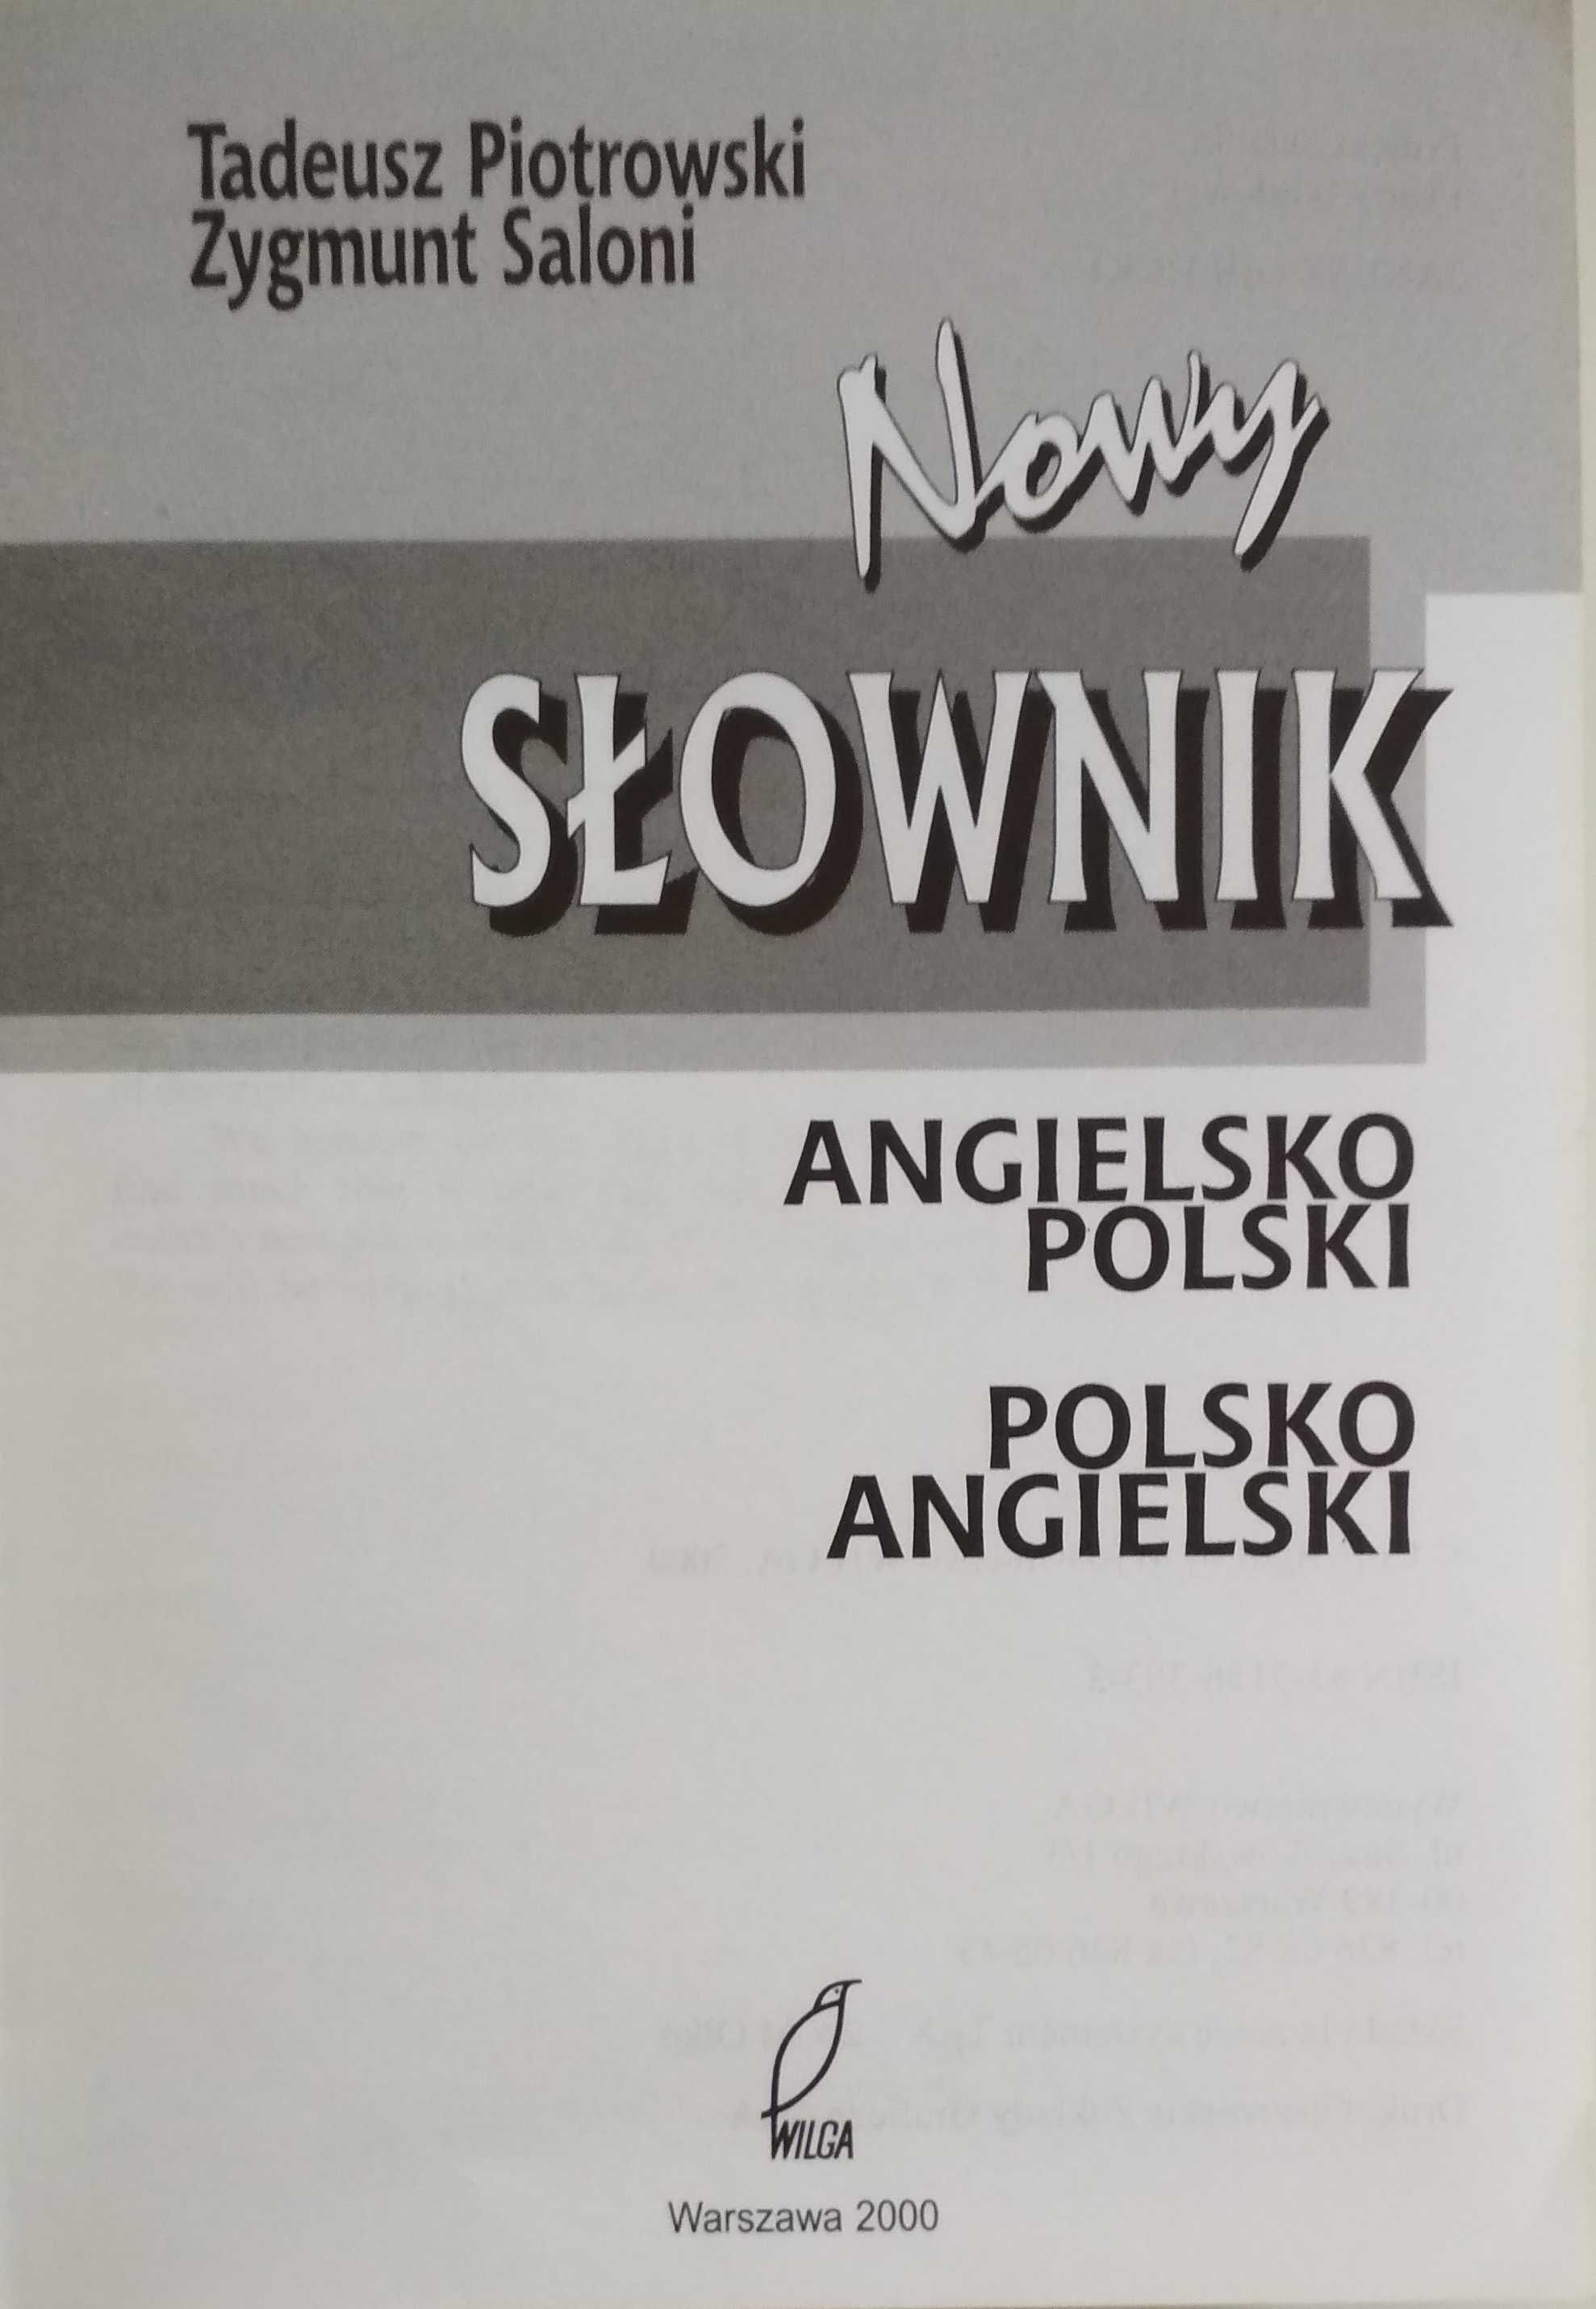 New Student's Dictionary Collins + gratis słownik polsko - angielski